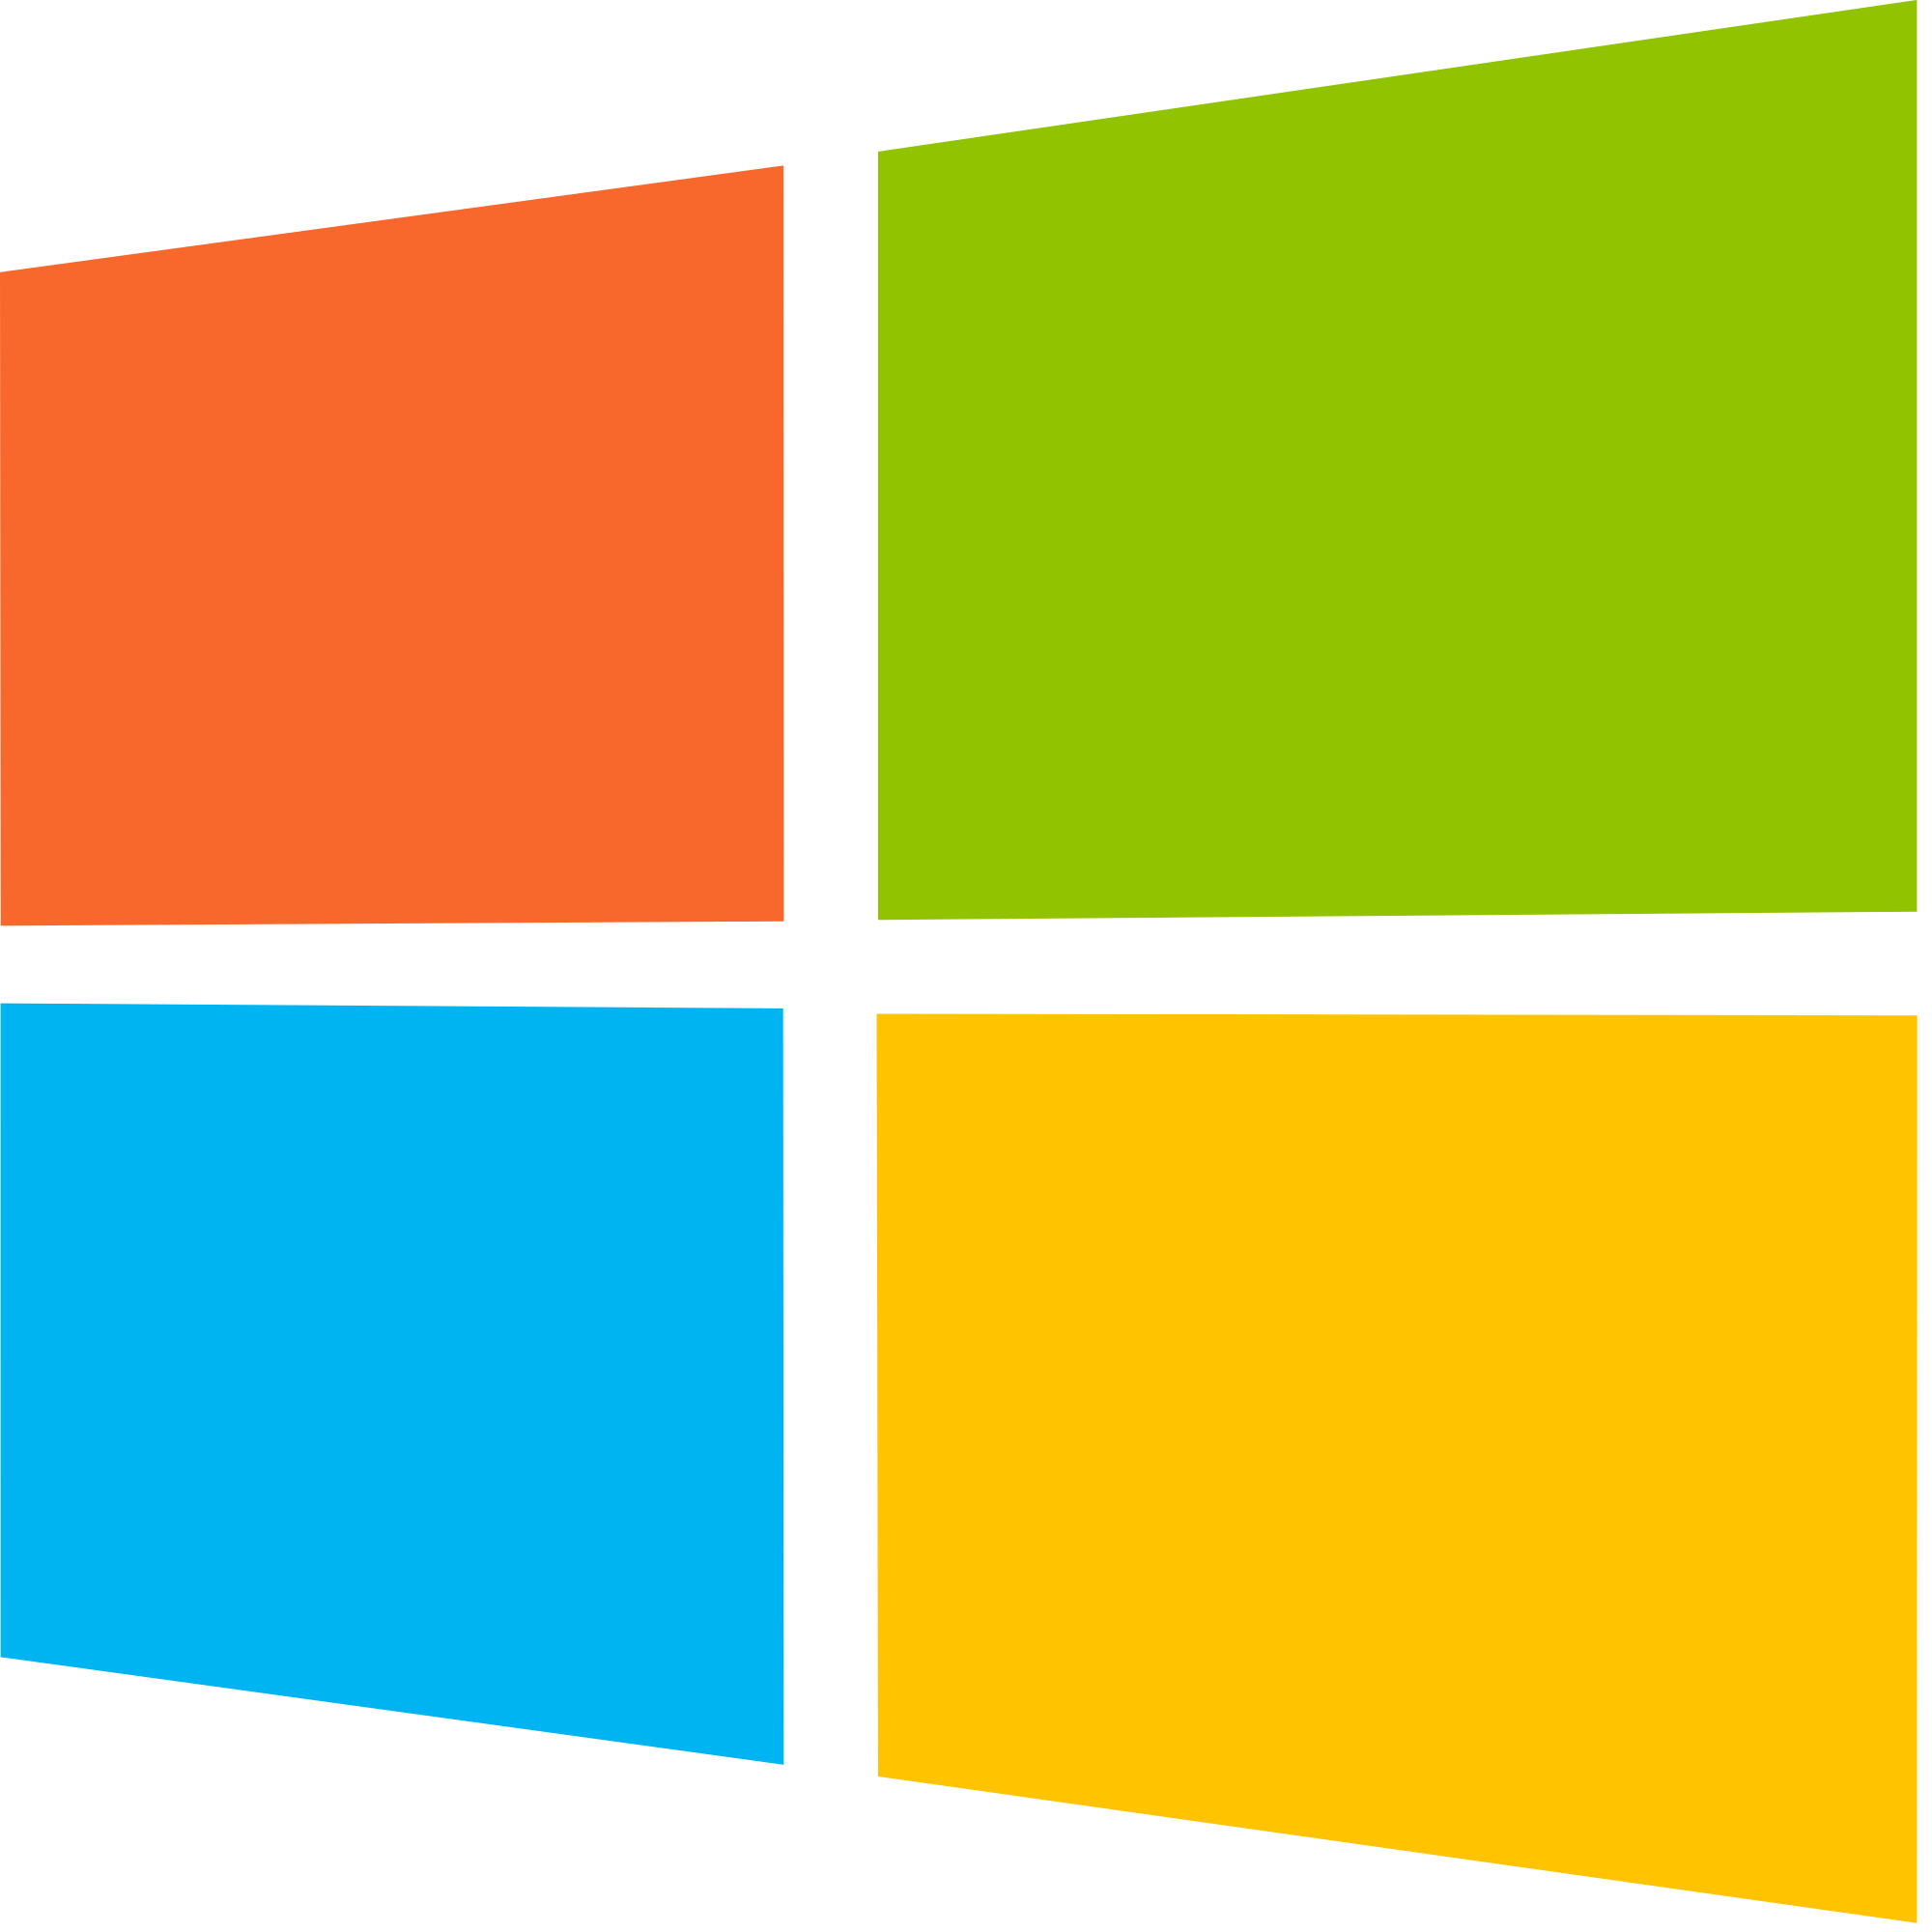 Fix Missing Windows 10 Upgrade Icon in Windows 7 or 8 Original 